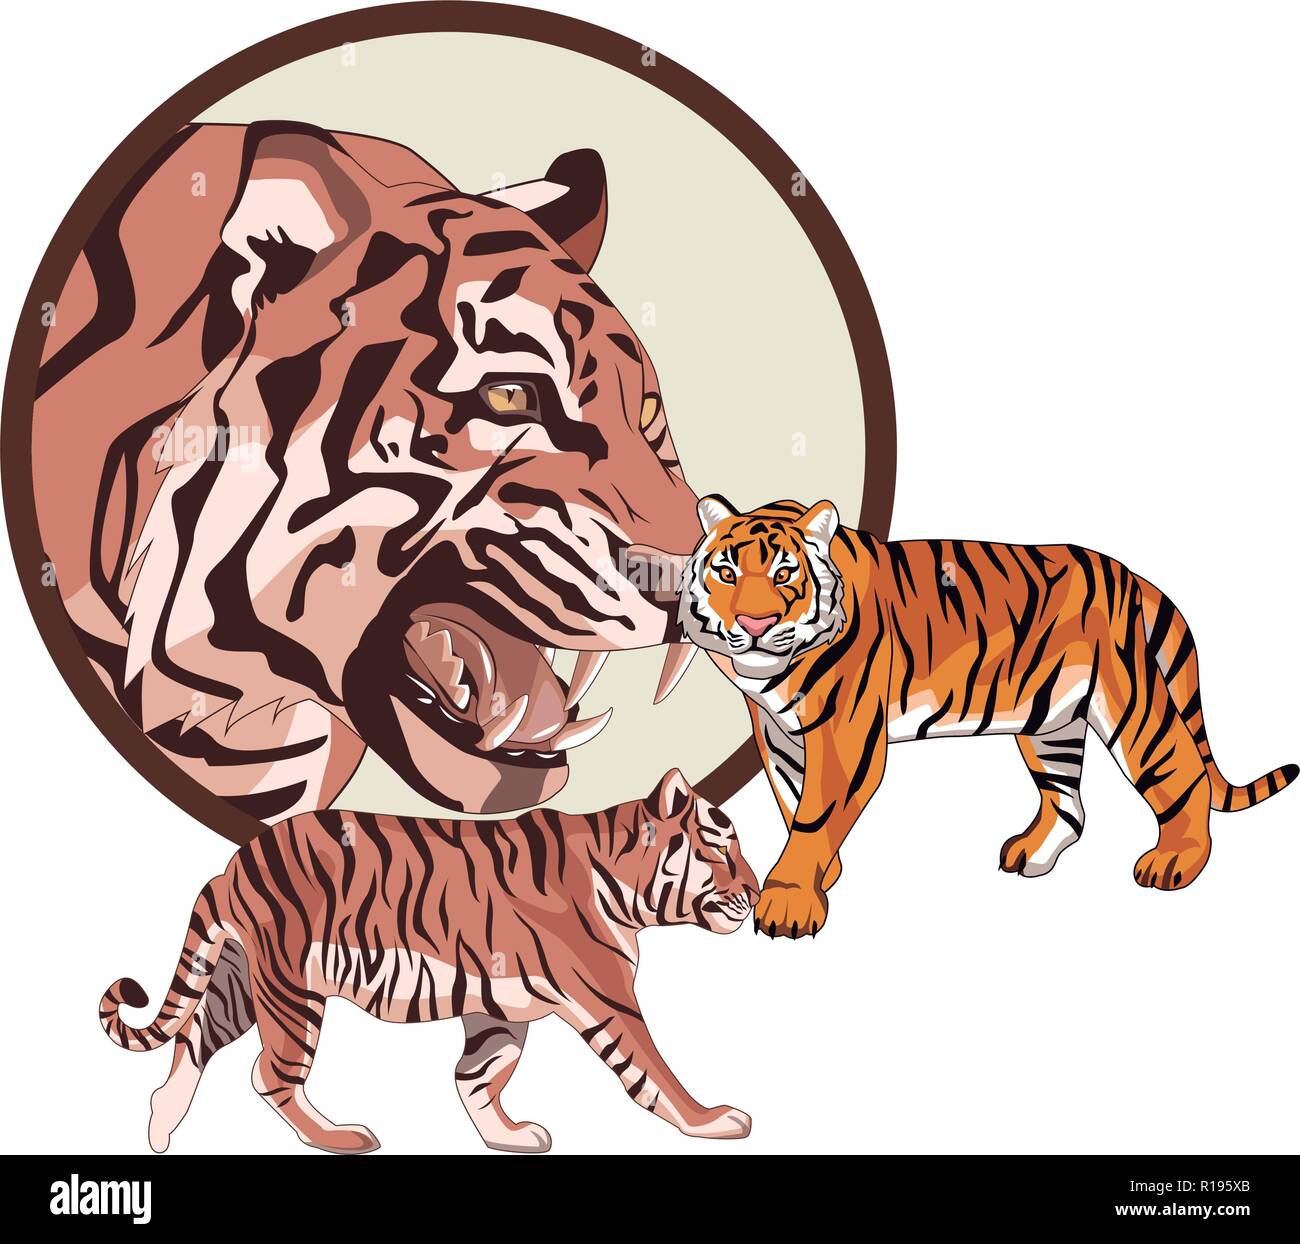 6277 Bengal Tiger Sketch Images Stock Photos  Vectors  Shutterstock